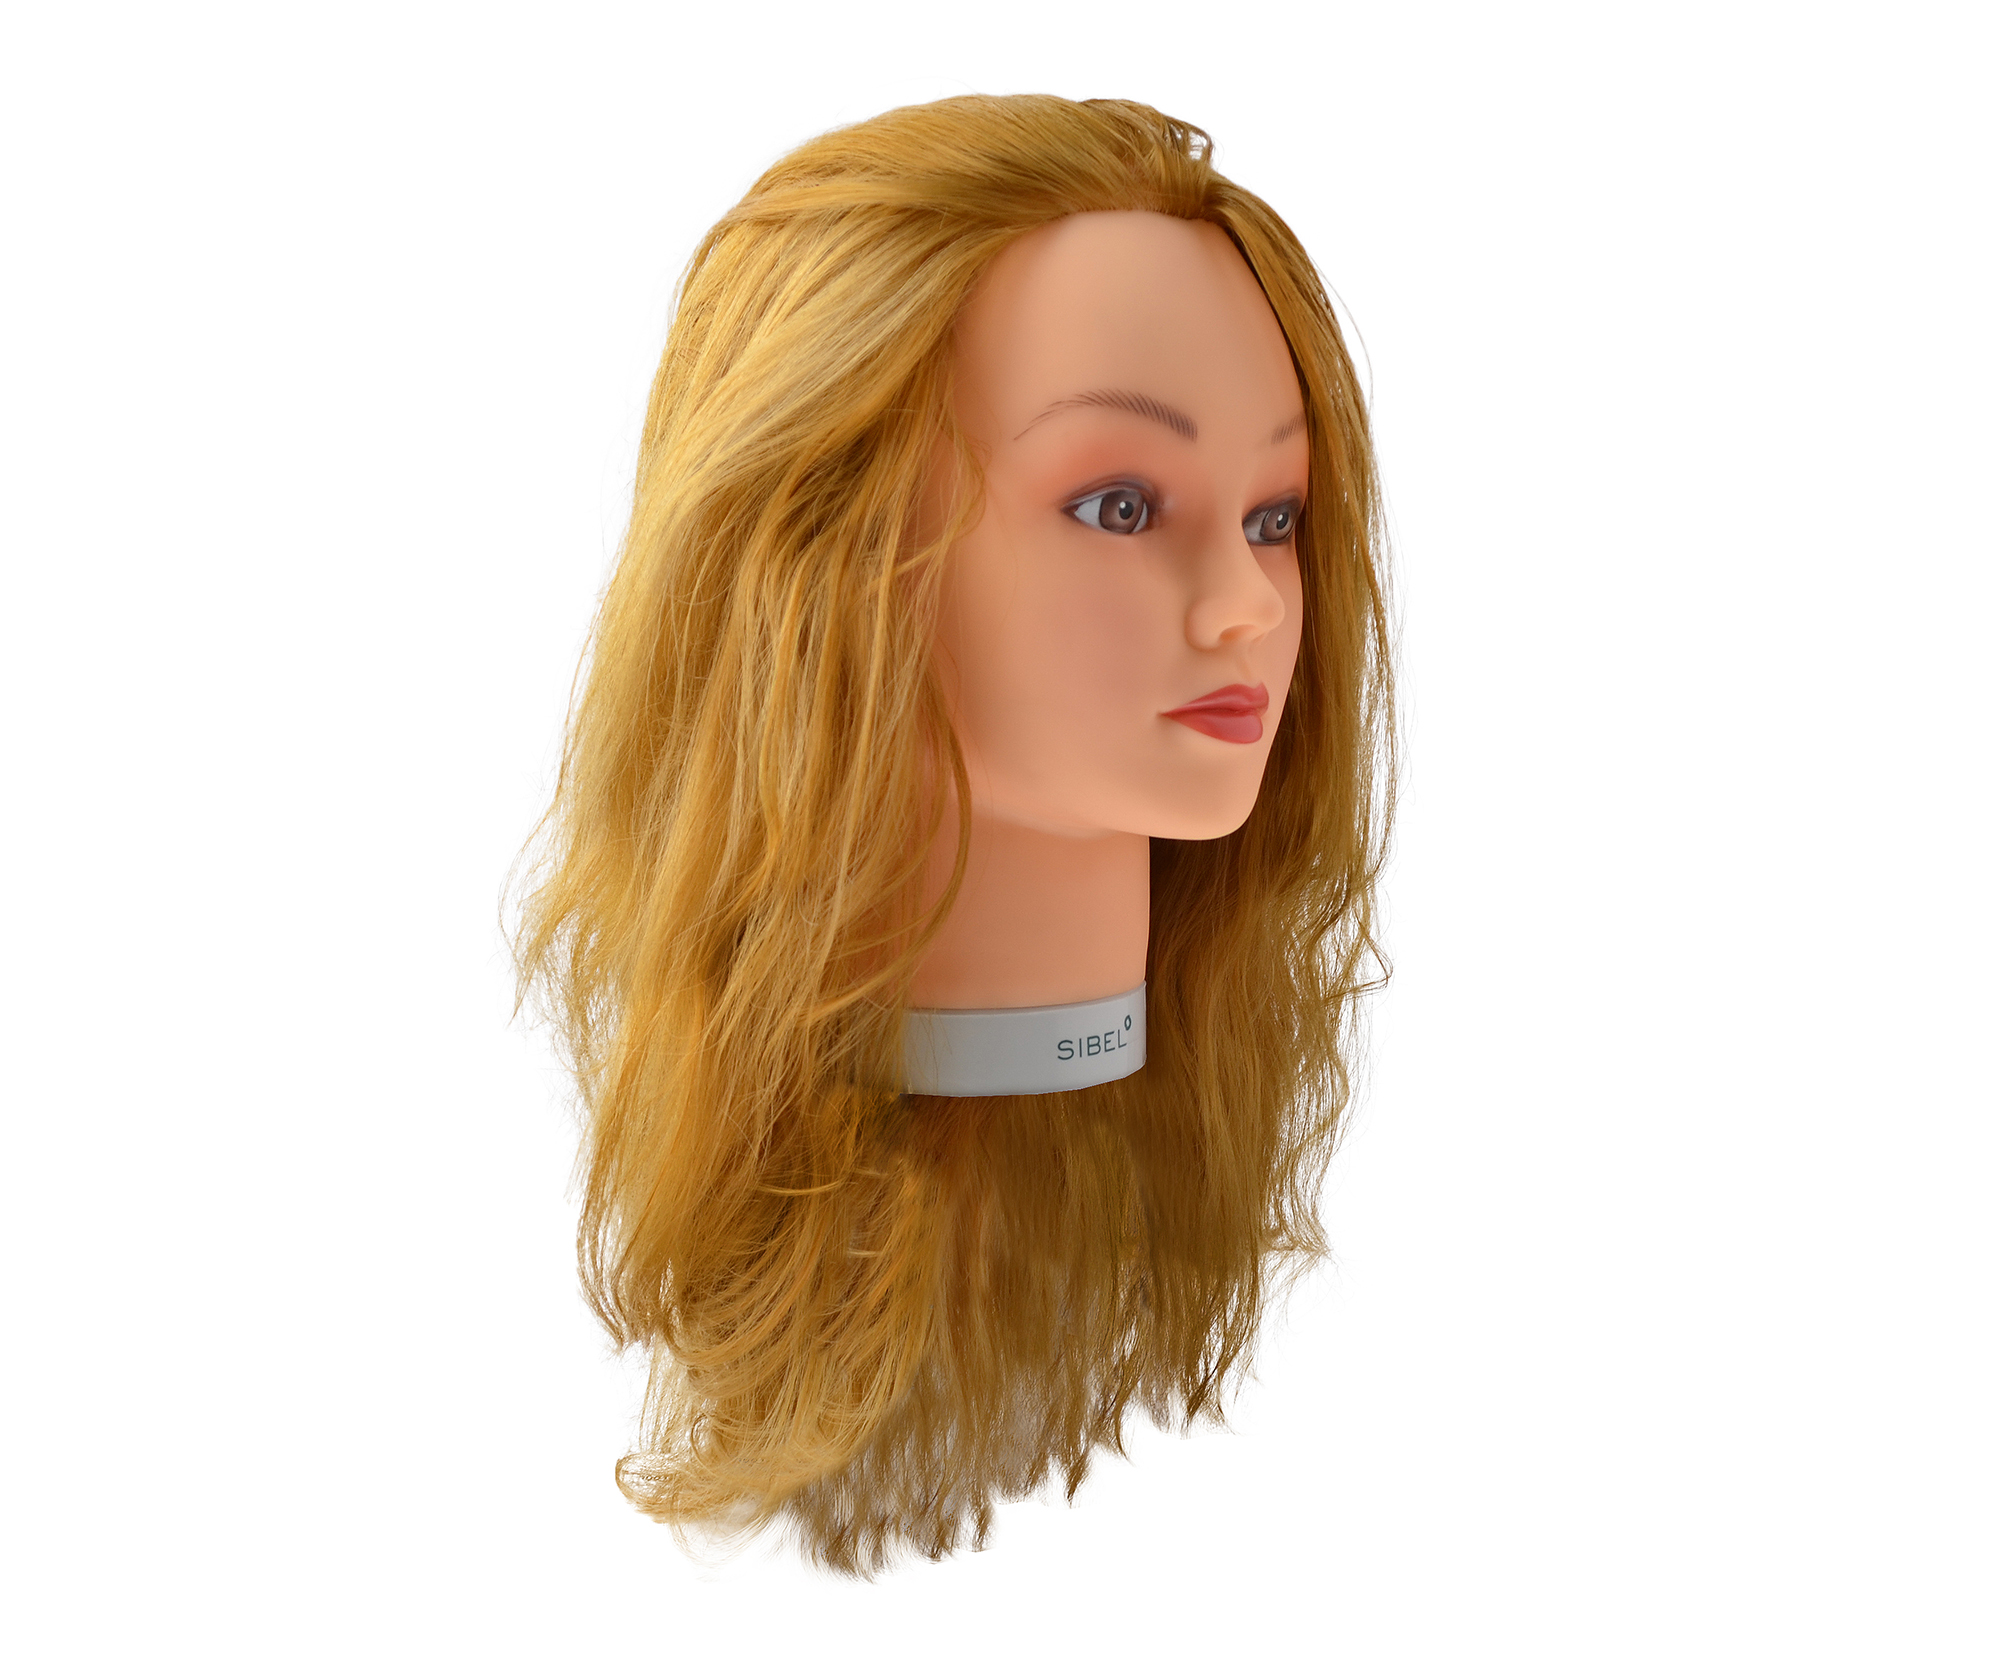 Cvičná hlava Sibel Jessica s umělými vlasy - blond 50 cm (0030091) + dárek zdarma